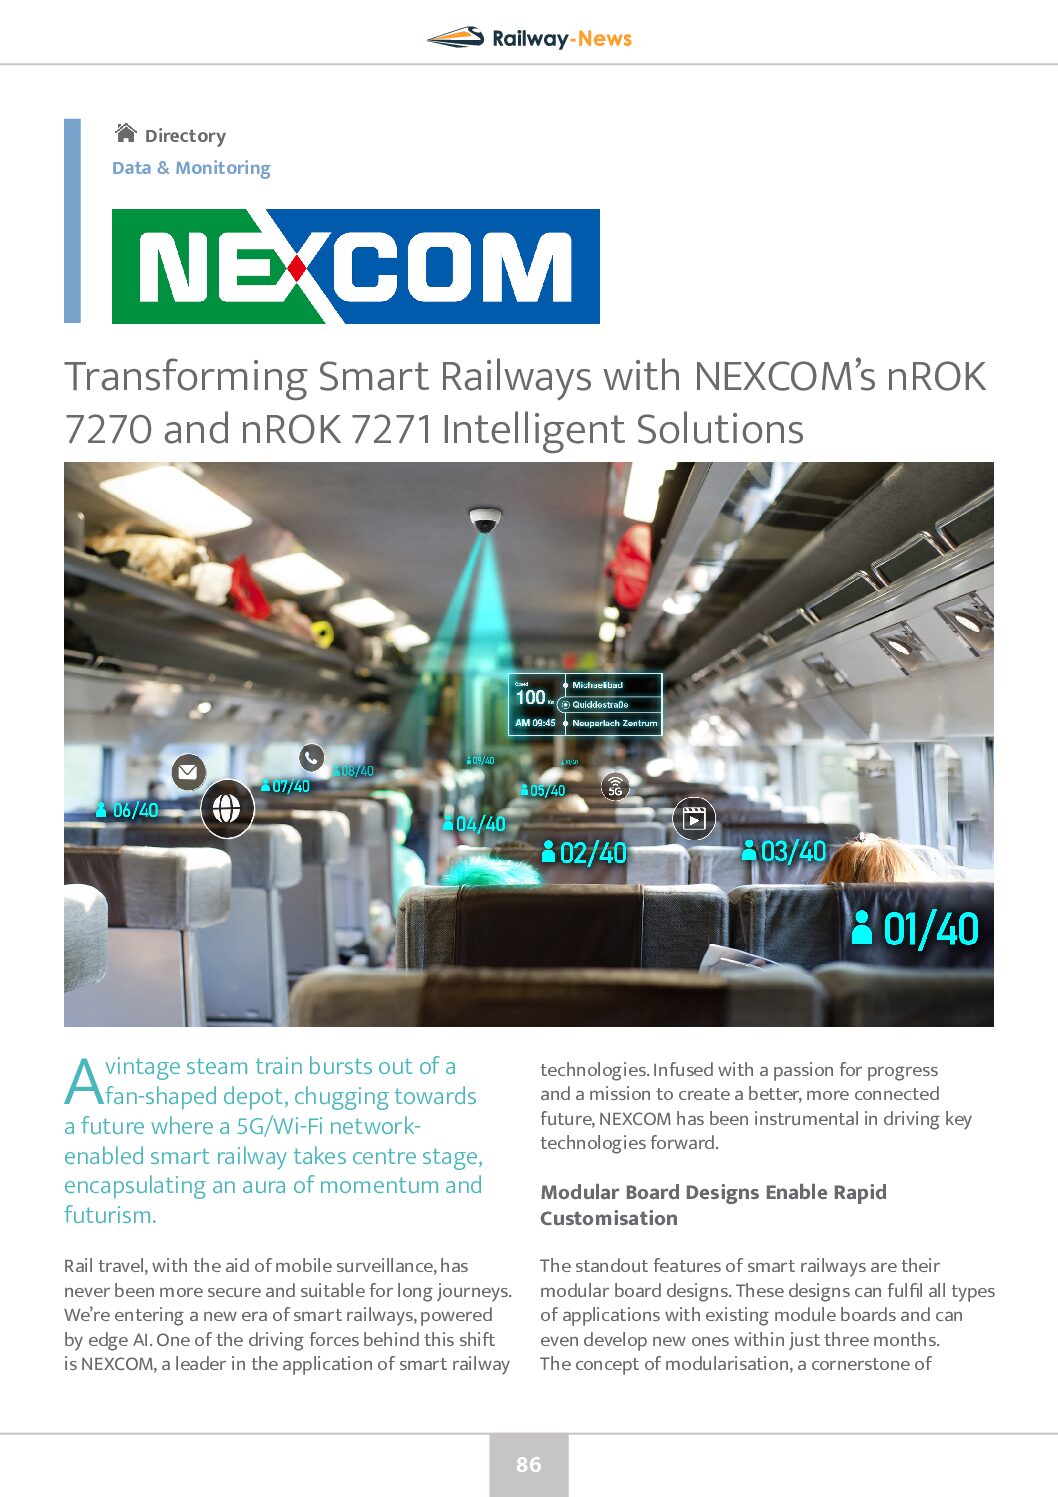 Transforming Smart Railways with NEXCOM’s nROK 7270 and nROK 7271 Intelligent Solutions